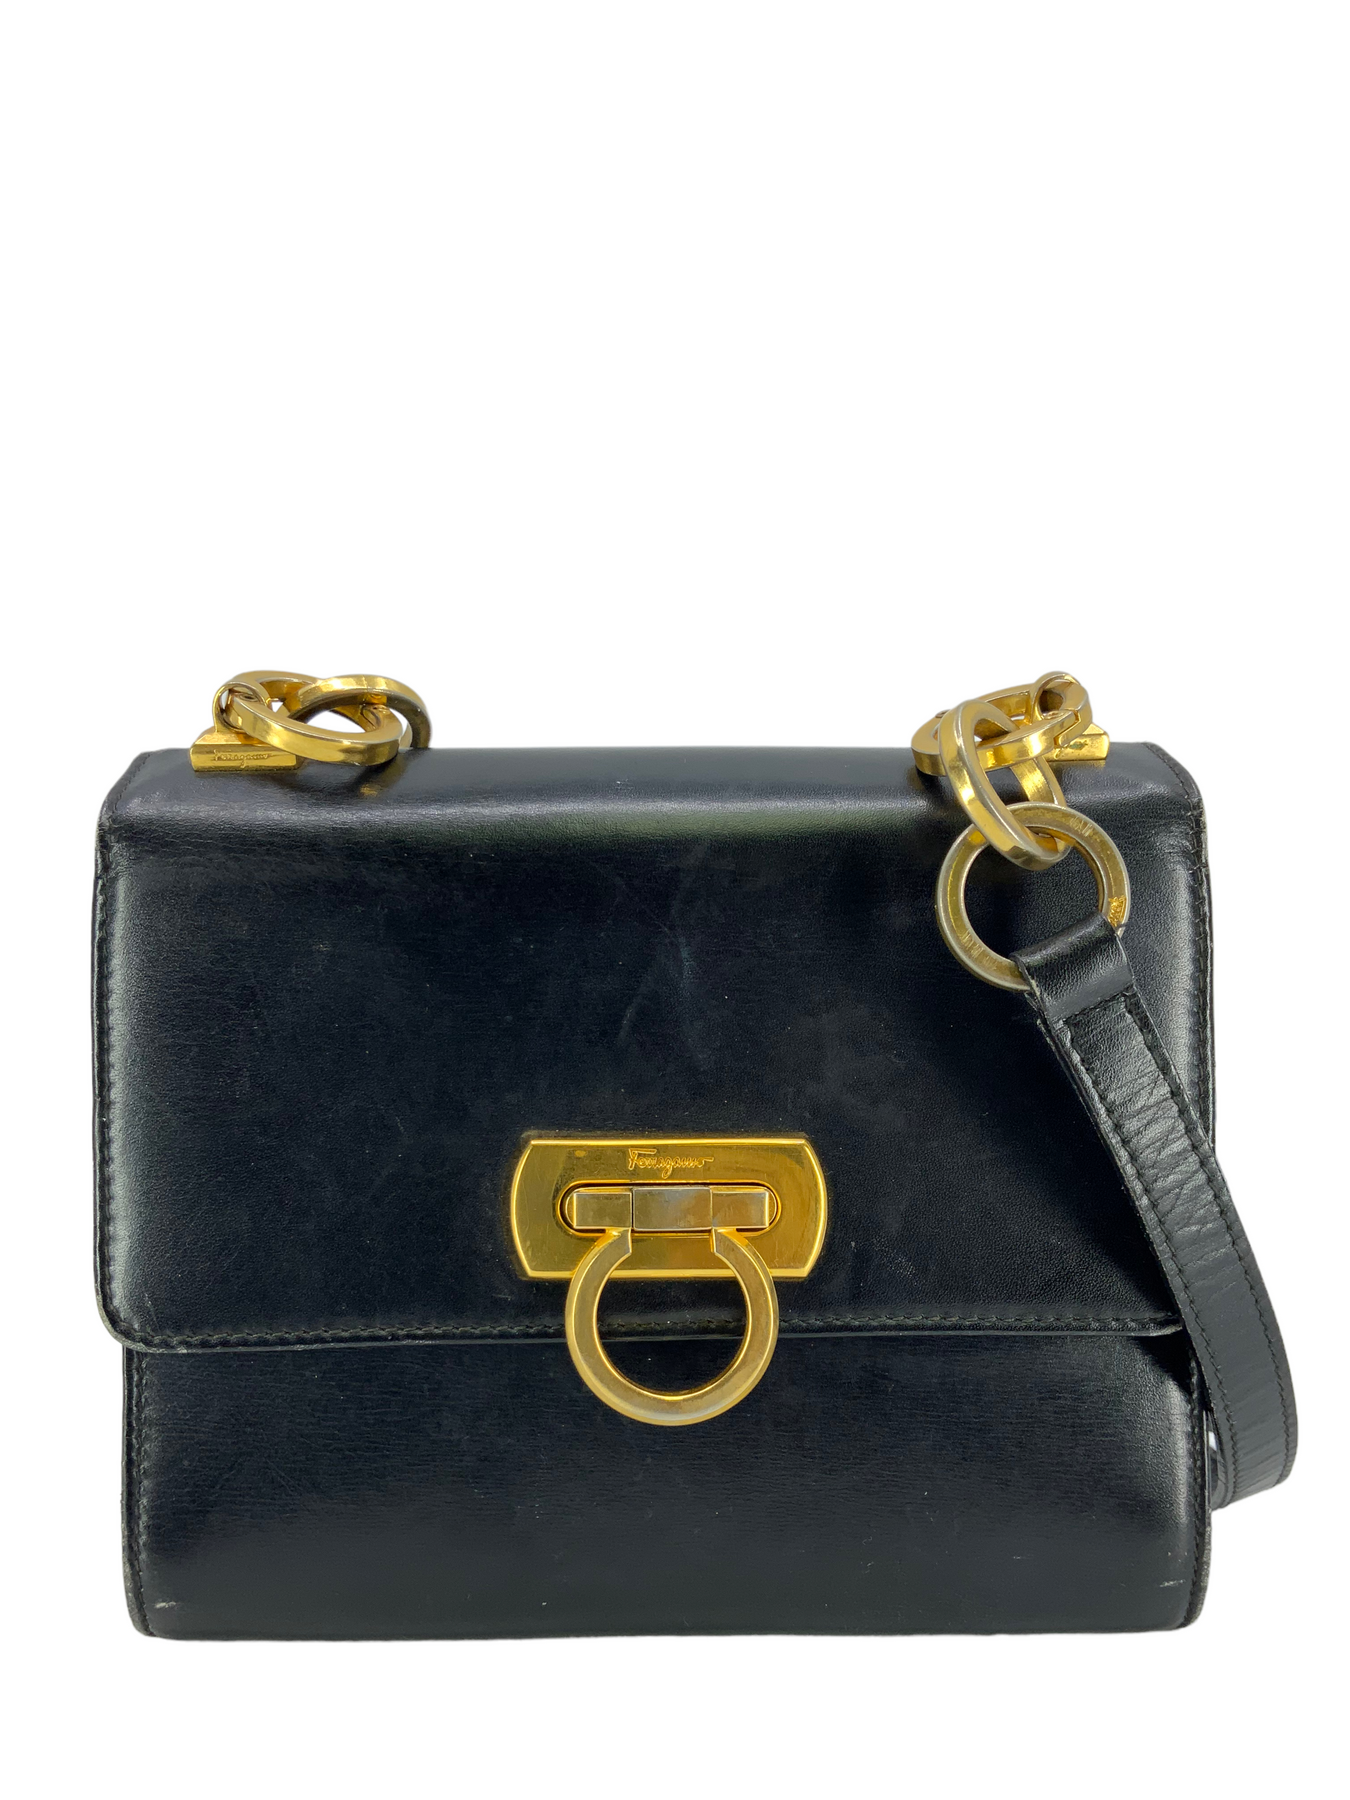 Salvatore Ferragamo Firenze Leather Bag Vintage Purse Italy Chestnut | eBay